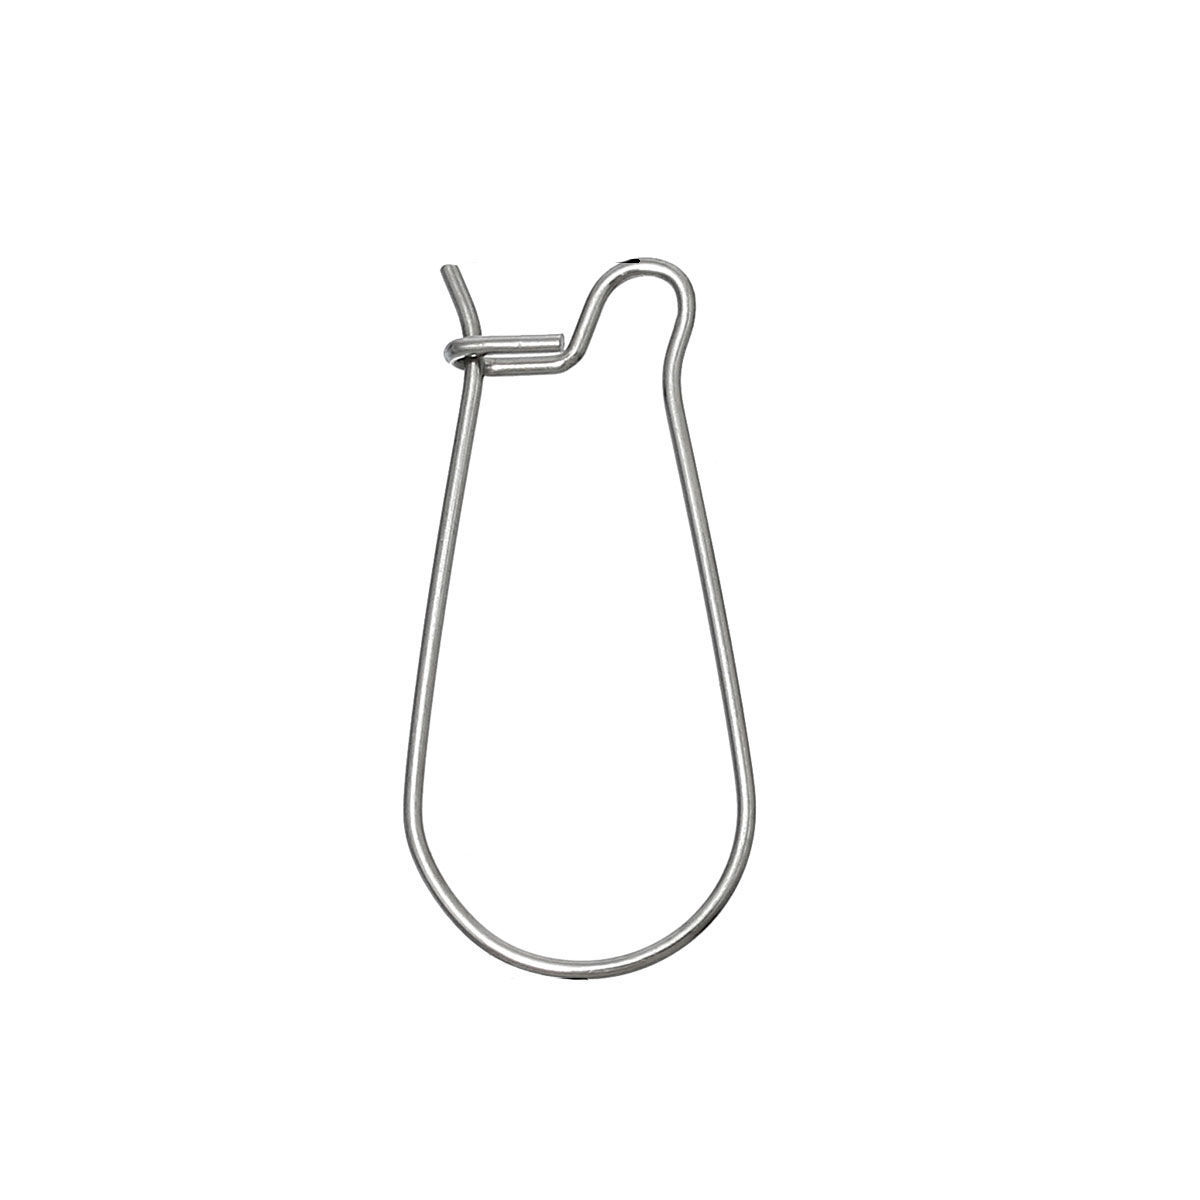 Picture of 304 Stainless Steel Kidney Ear Wire Hooks Earring Findings Silver Tone 21mm x11mm( 7/8" x 3/8") - 20mm x9mm( 6/8" x 3/8"), Post/ Wire Size: (21 gauge), 50 PCs